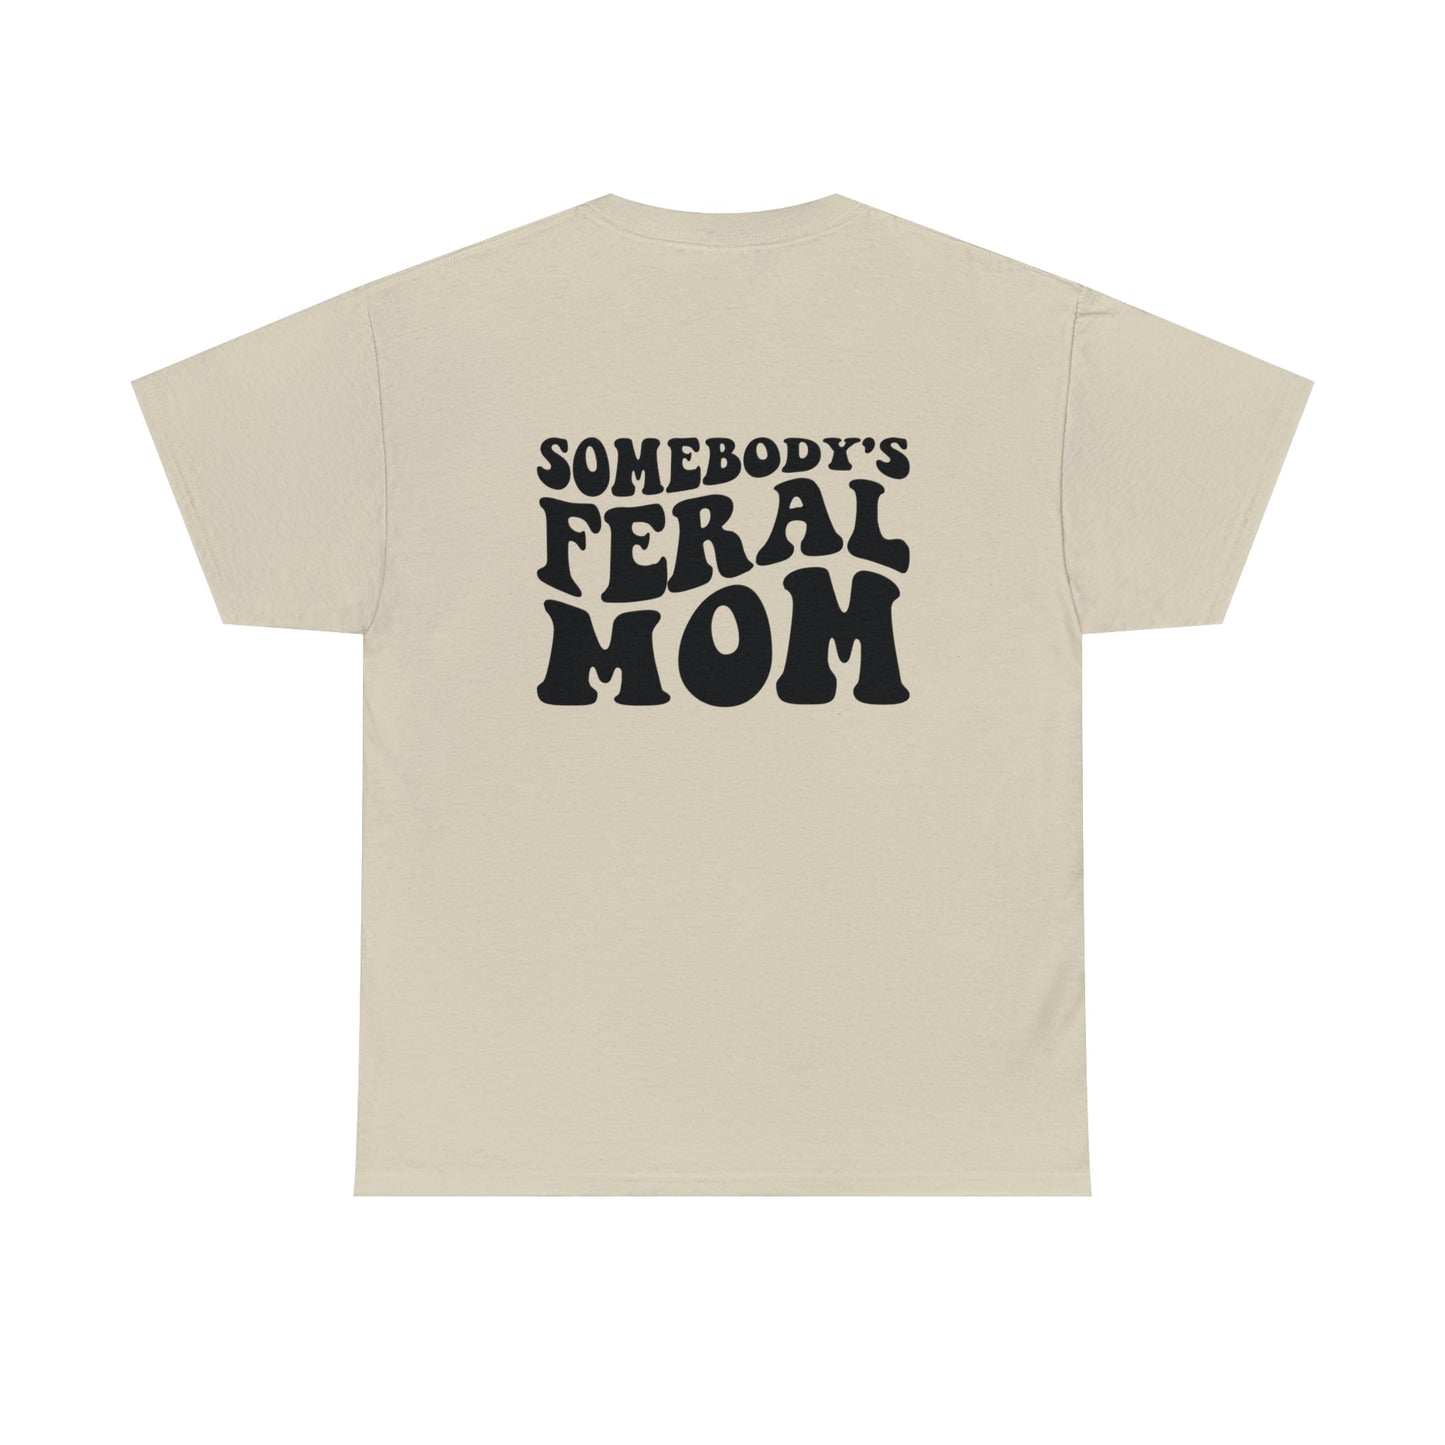 Somebody's Feral Mom Wavy Text Shirt, Feral Shirt, Gift For Mom, Trendy Mom Shirt, Double Sided, Mom Era Shirt, New Mom Shirt